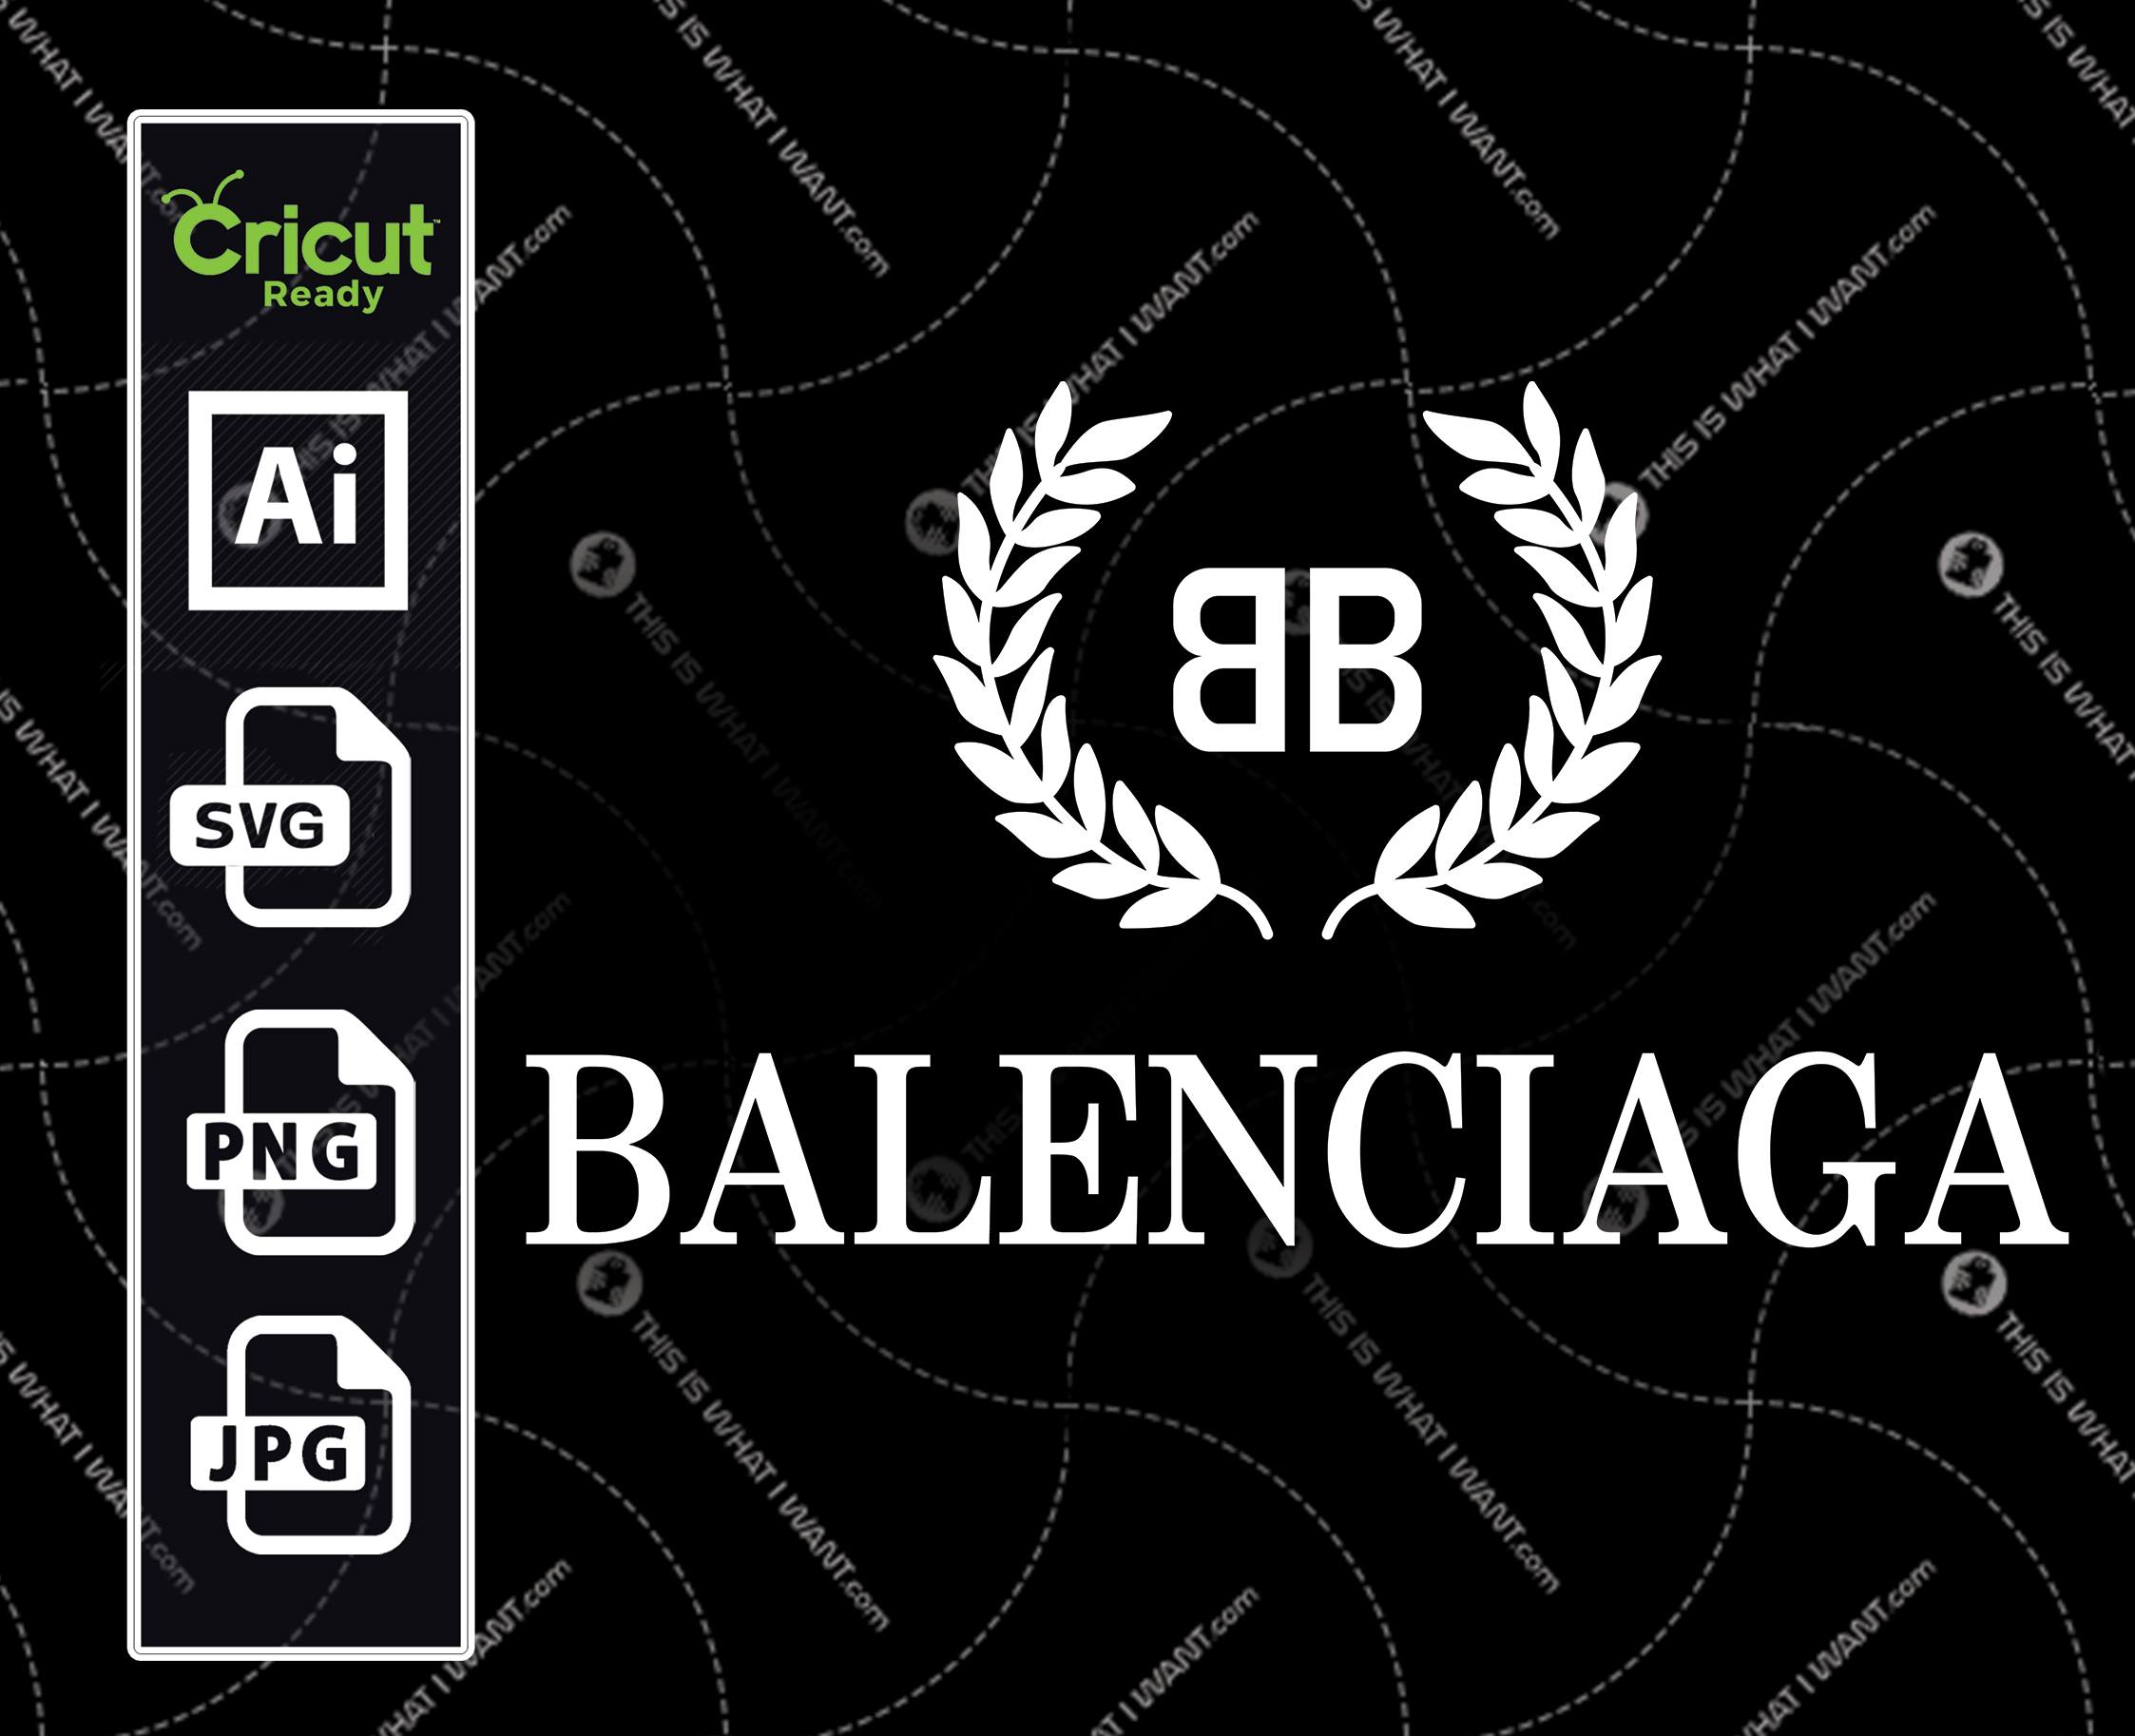 grabadora responder rompecabezas Balenciaga Inspired printable graphic art logo icon plus text – vector art  design hi quality – Jpg, SVG, AI, PNG – Cricut Ready - This is What I Want